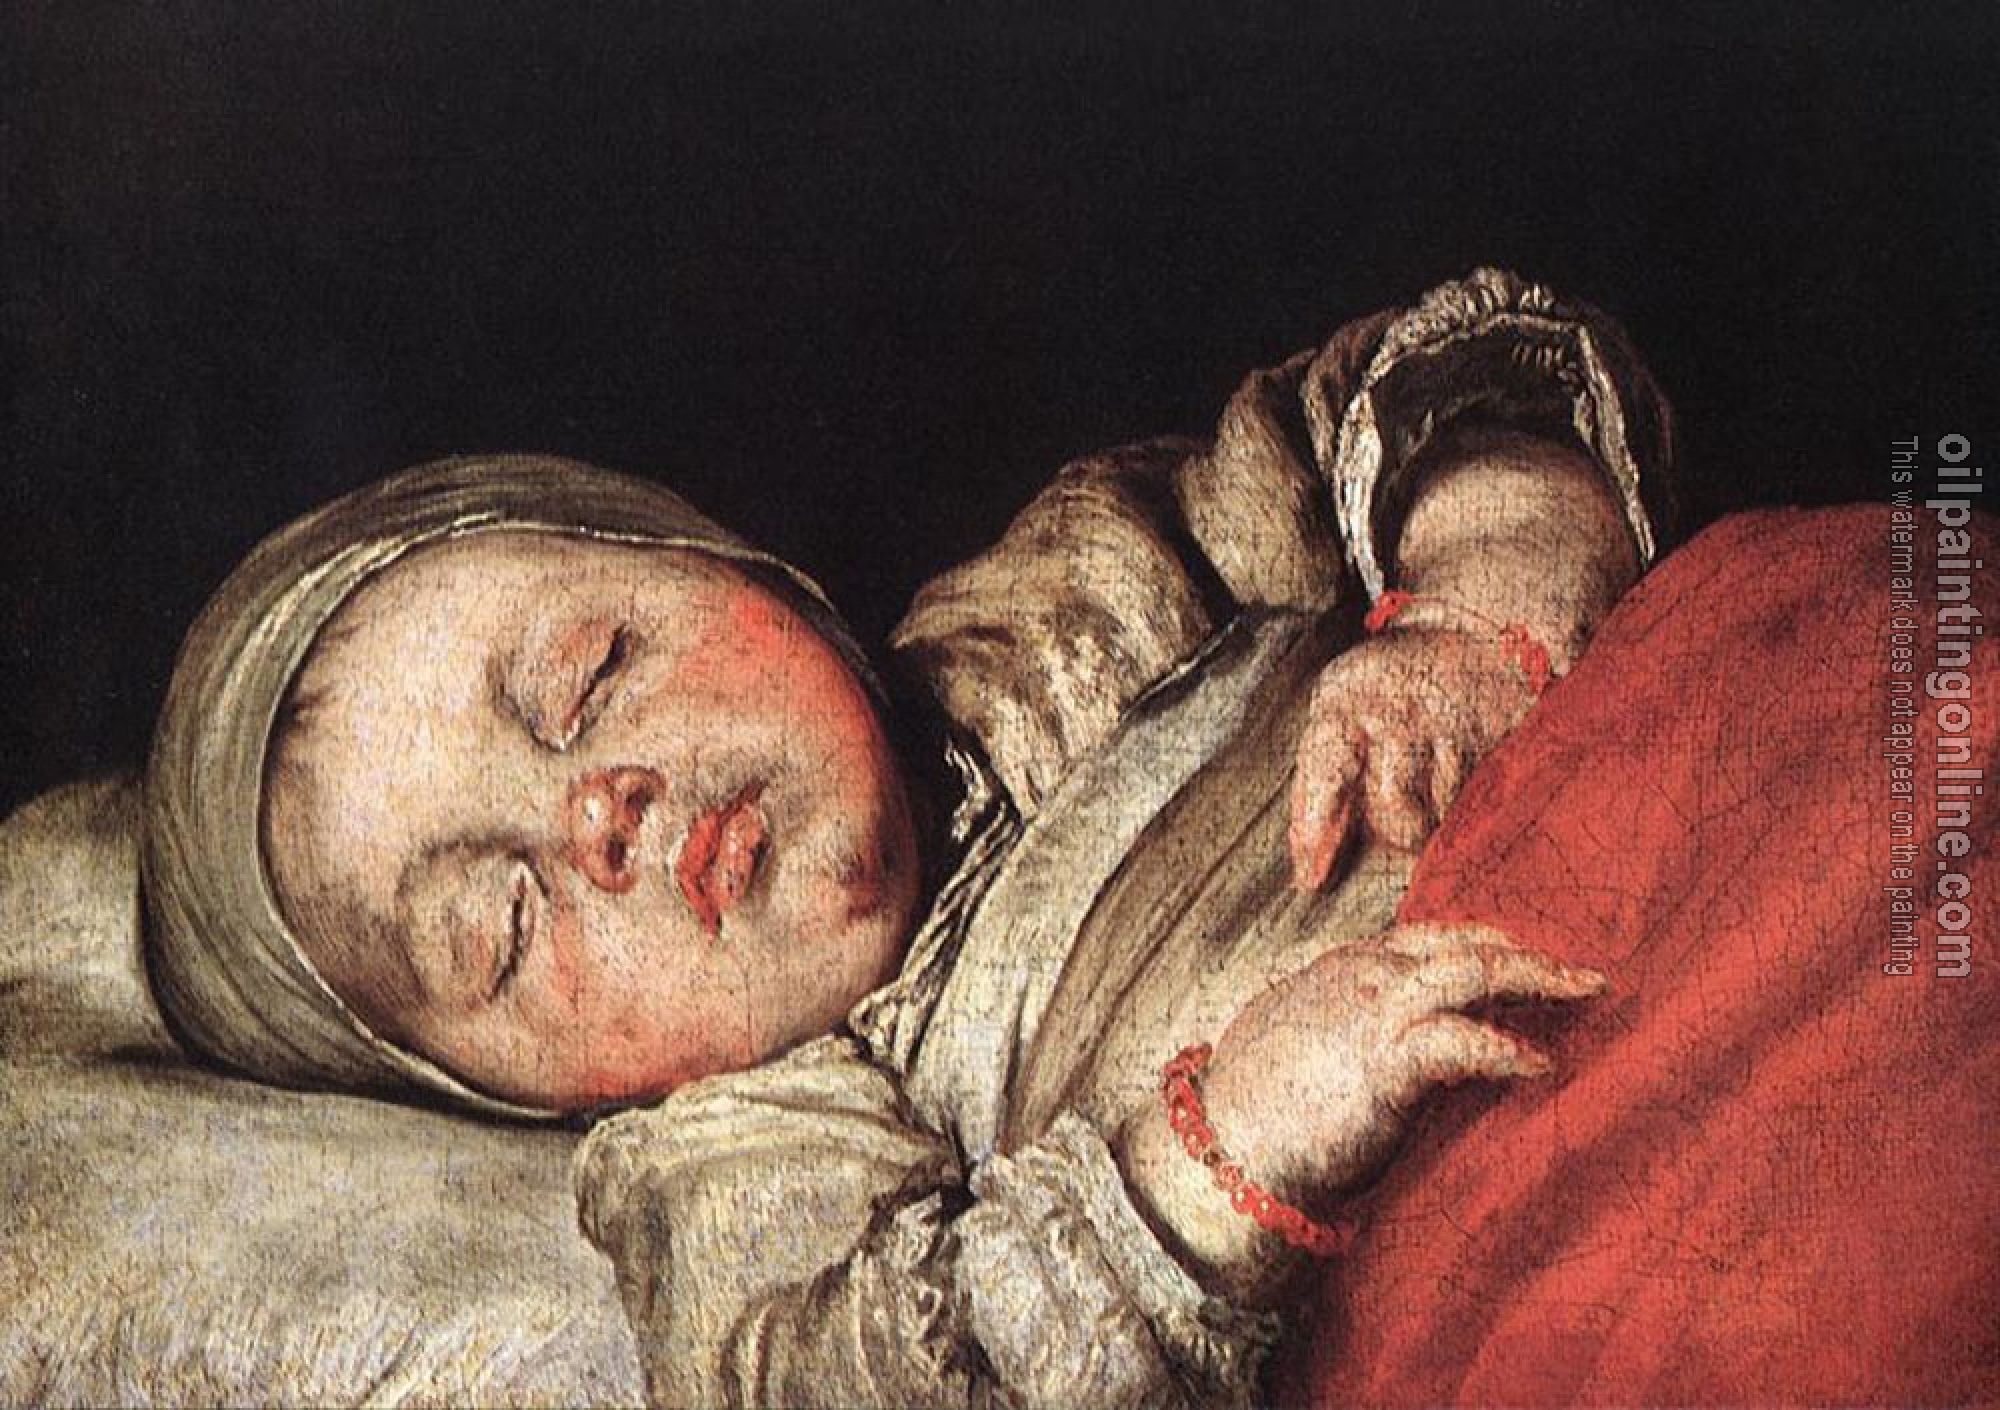 Strozzi, Bernardo - Sleeping Child